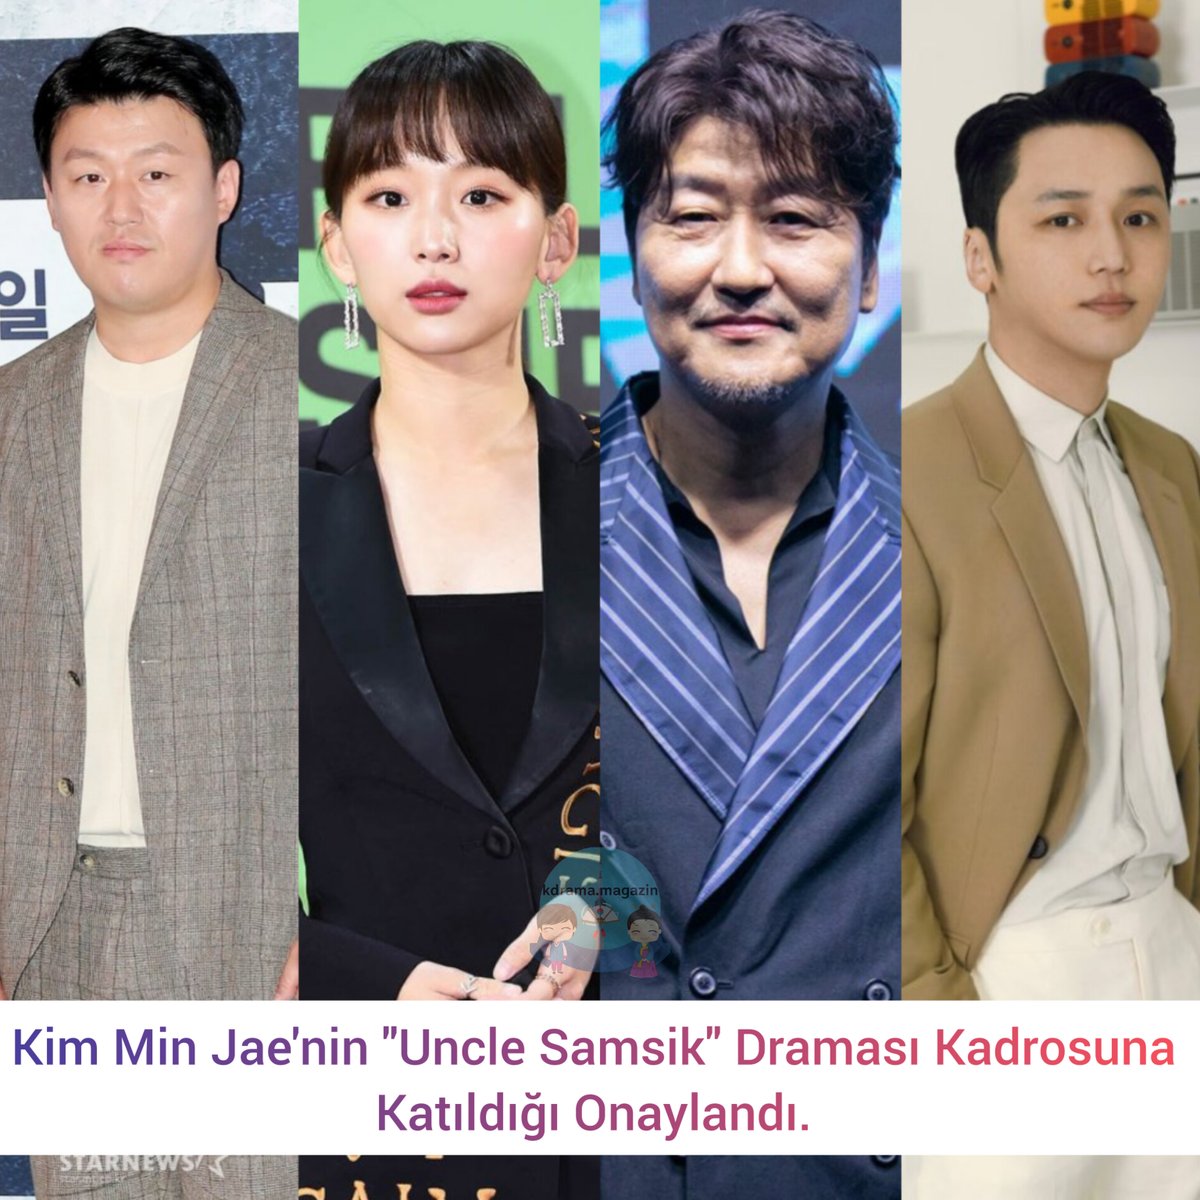 #KimMinJae'nin #UncleSamsik Draması Kadrosuna Katıldığı Onaylandı. 

🎬Yoo Yeon-chul rolünü oynayacak. 

#ByunYoHan #LeeKyuHyung #SeoHyunWoo #JinKiJoo